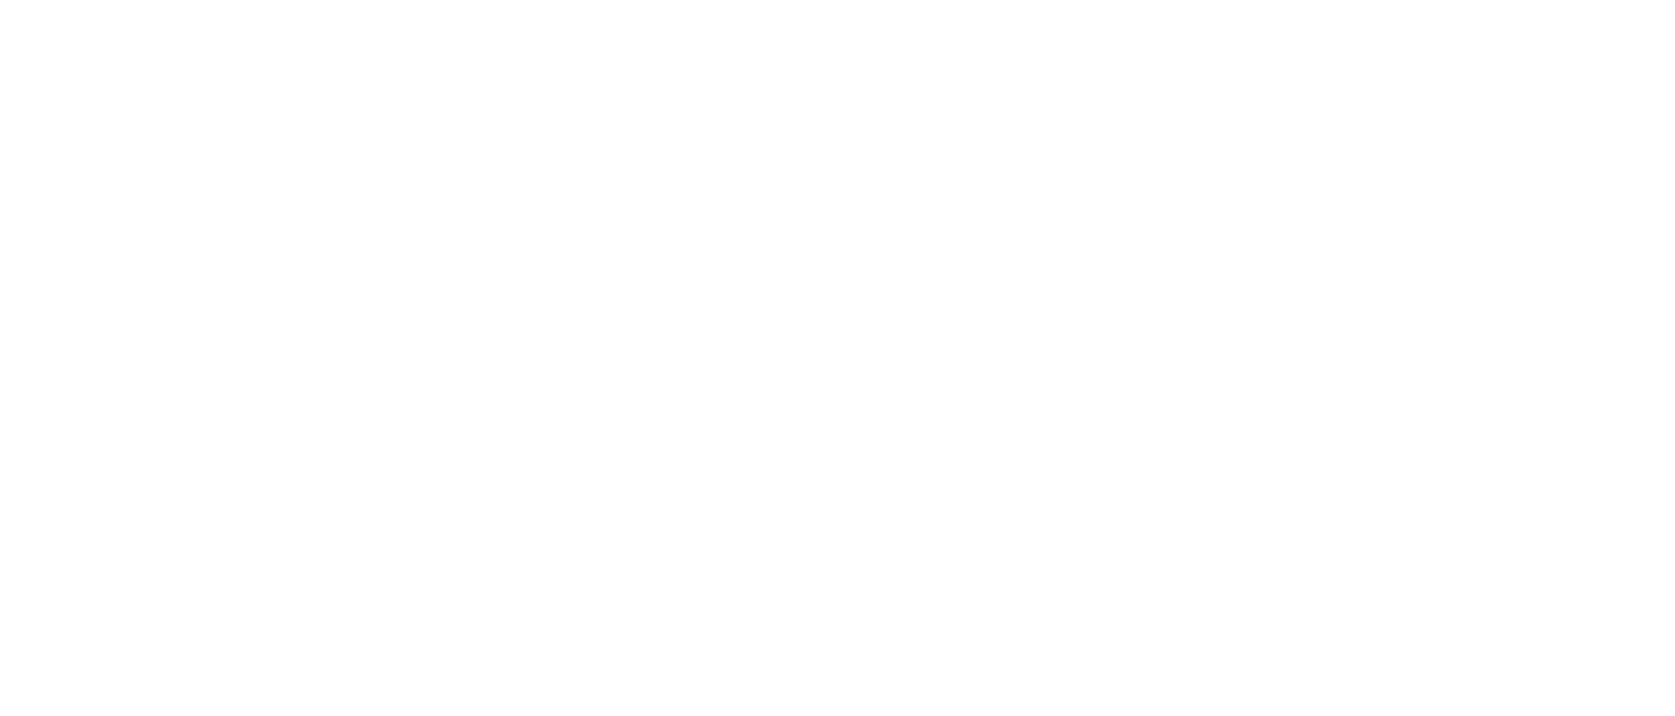 universiteit-utrecht-logo-black-and-white-2